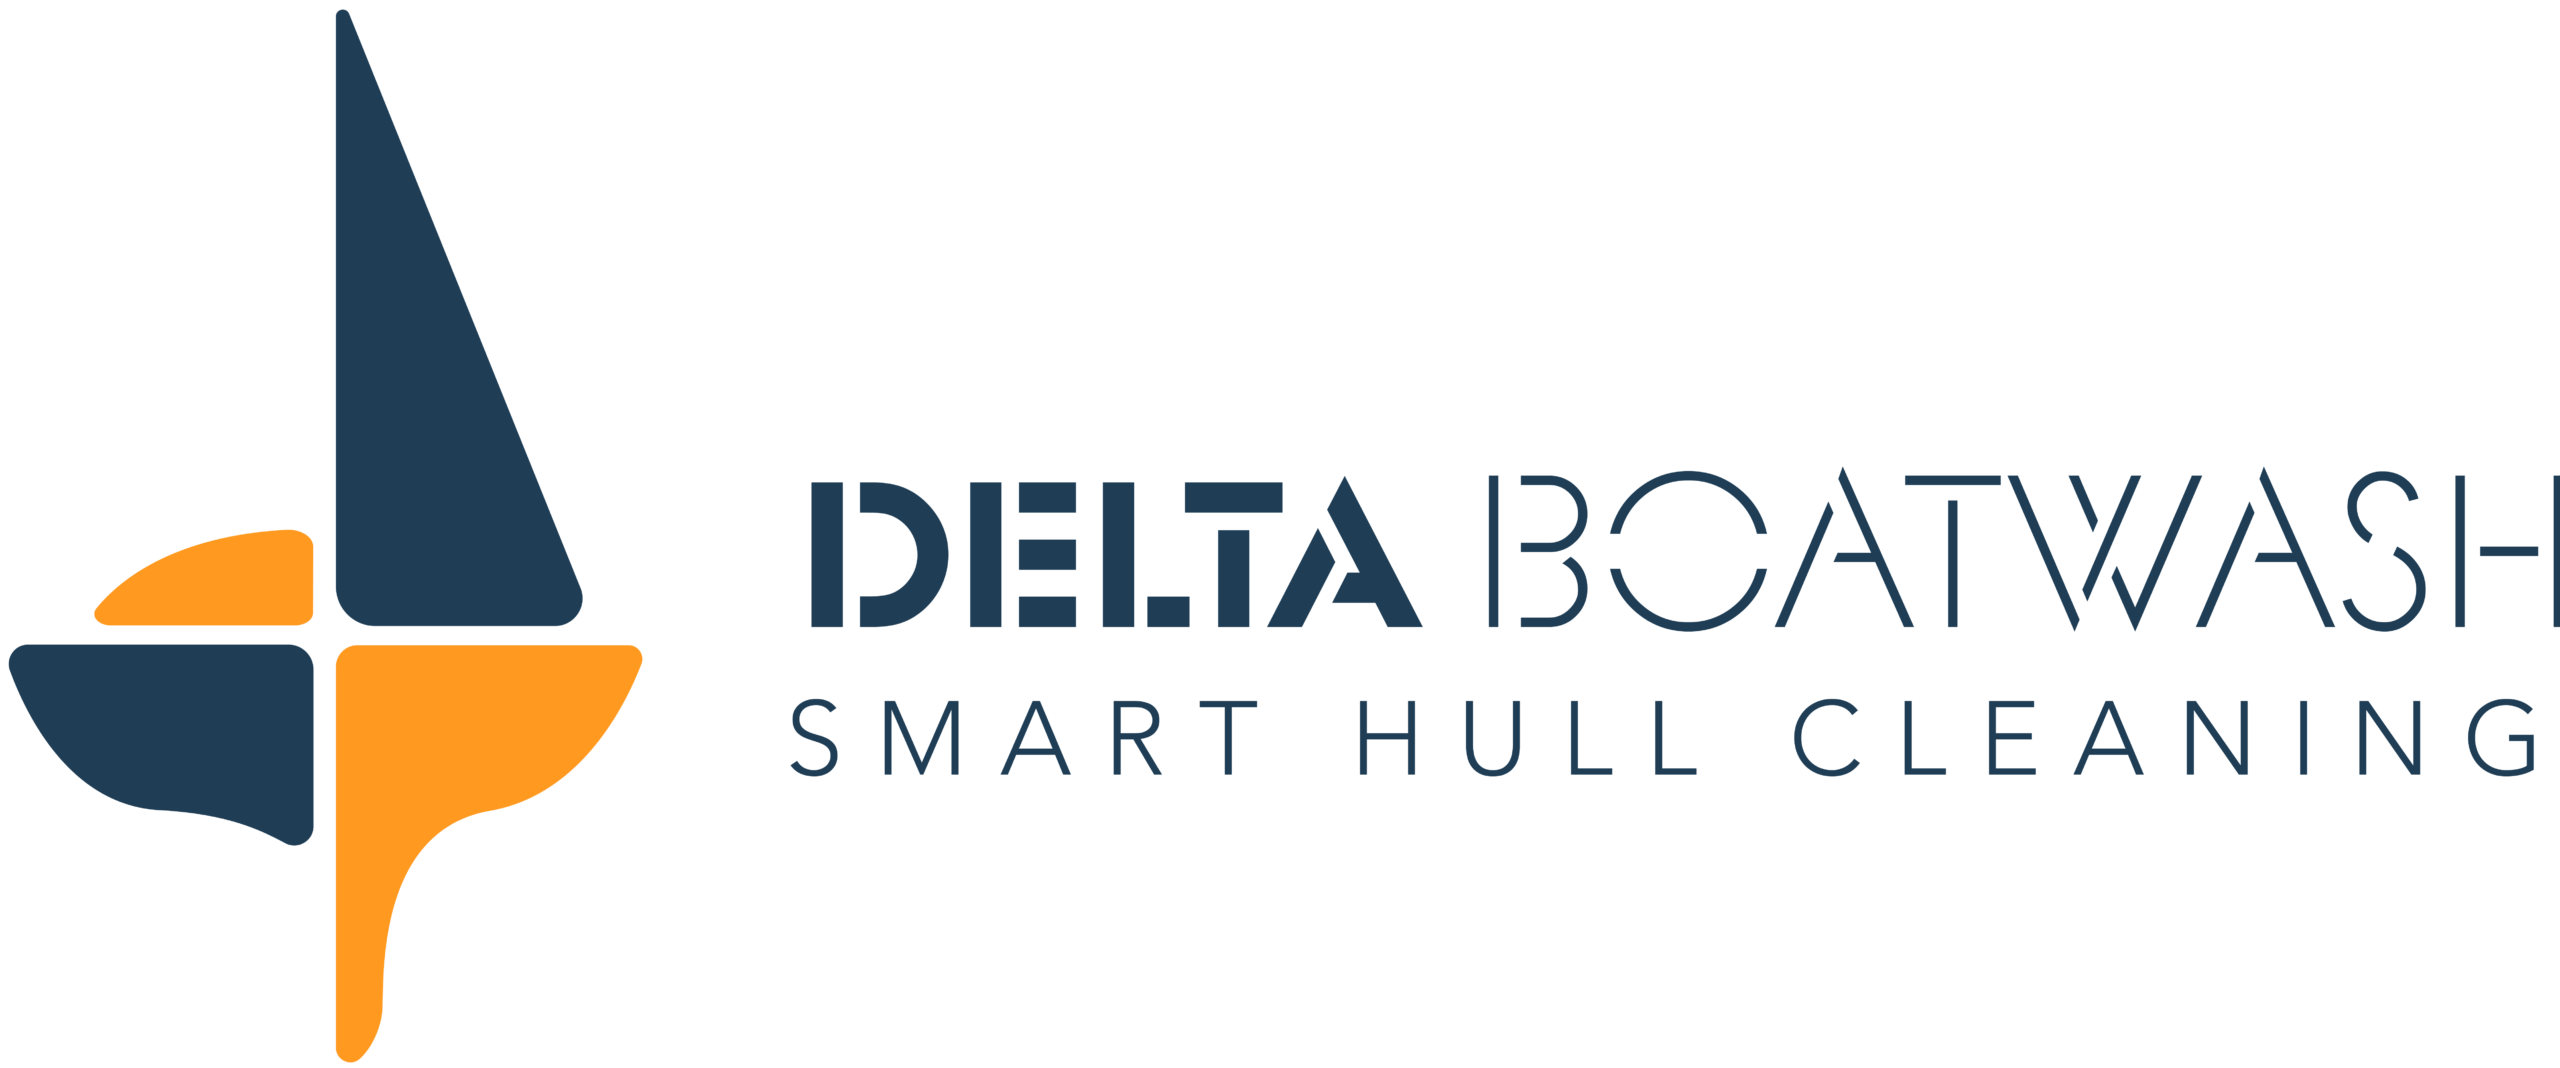 logo Delta Boatwash + slogan